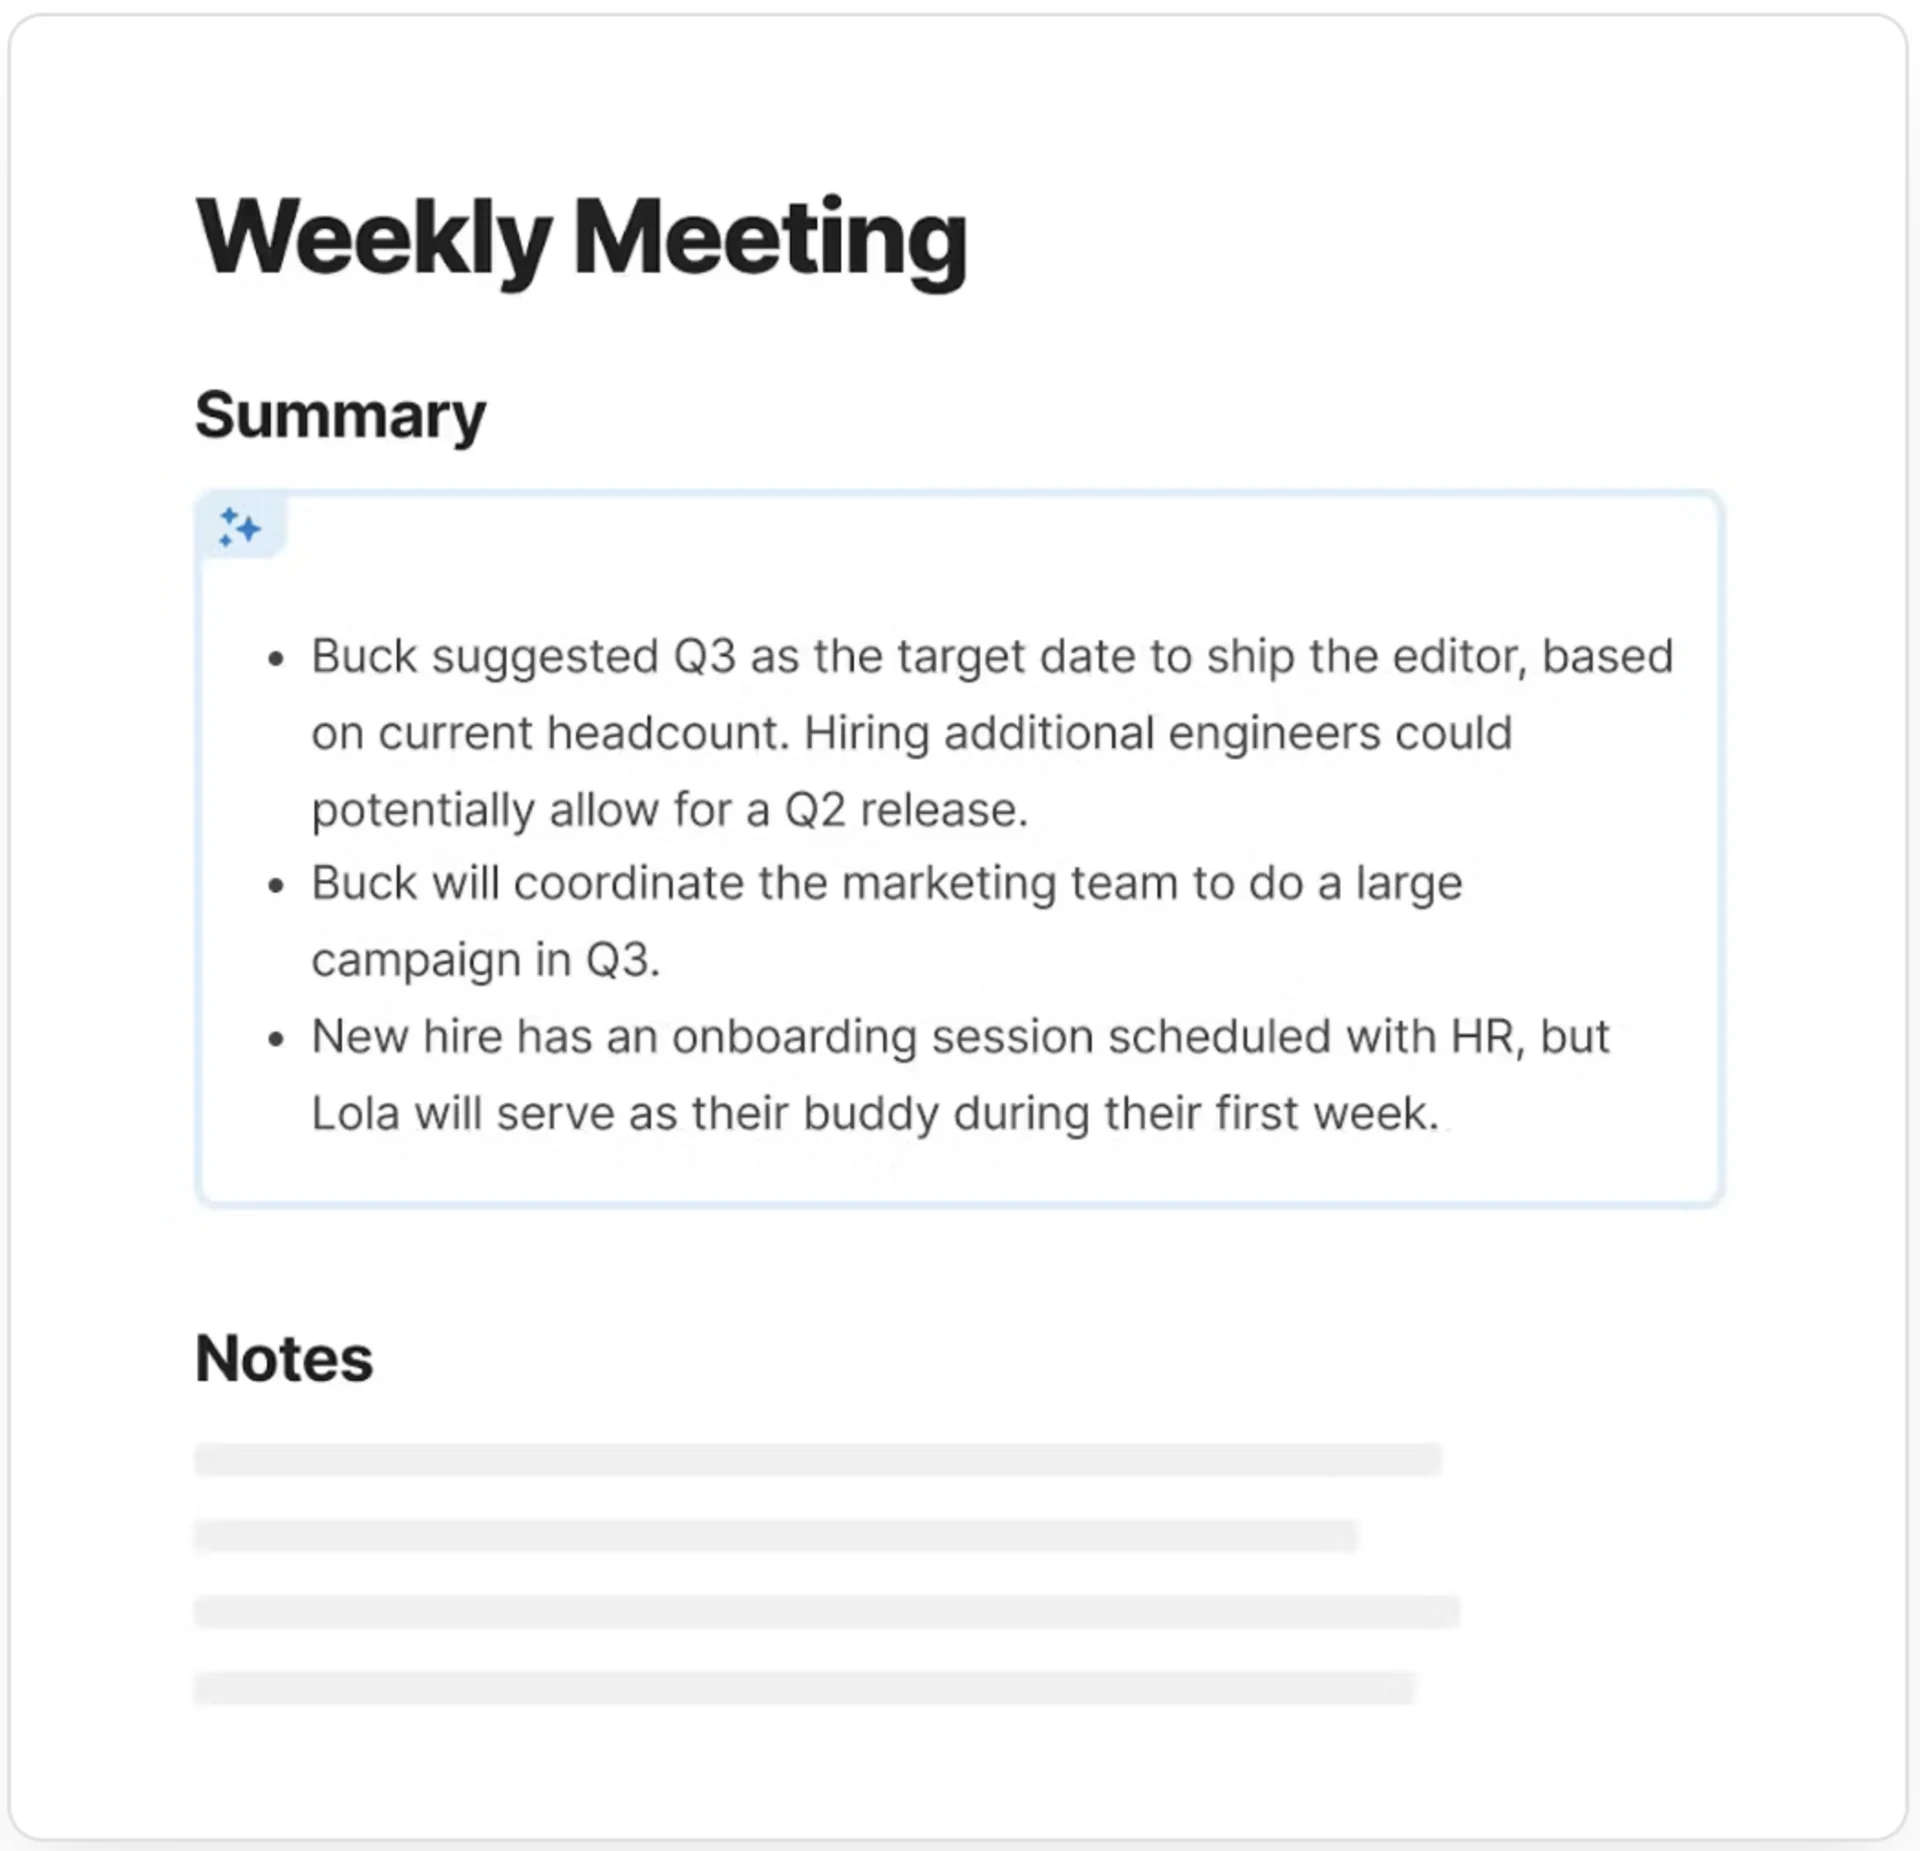 Coda AI Auto summarise weekly meeting notes for productivity AI.